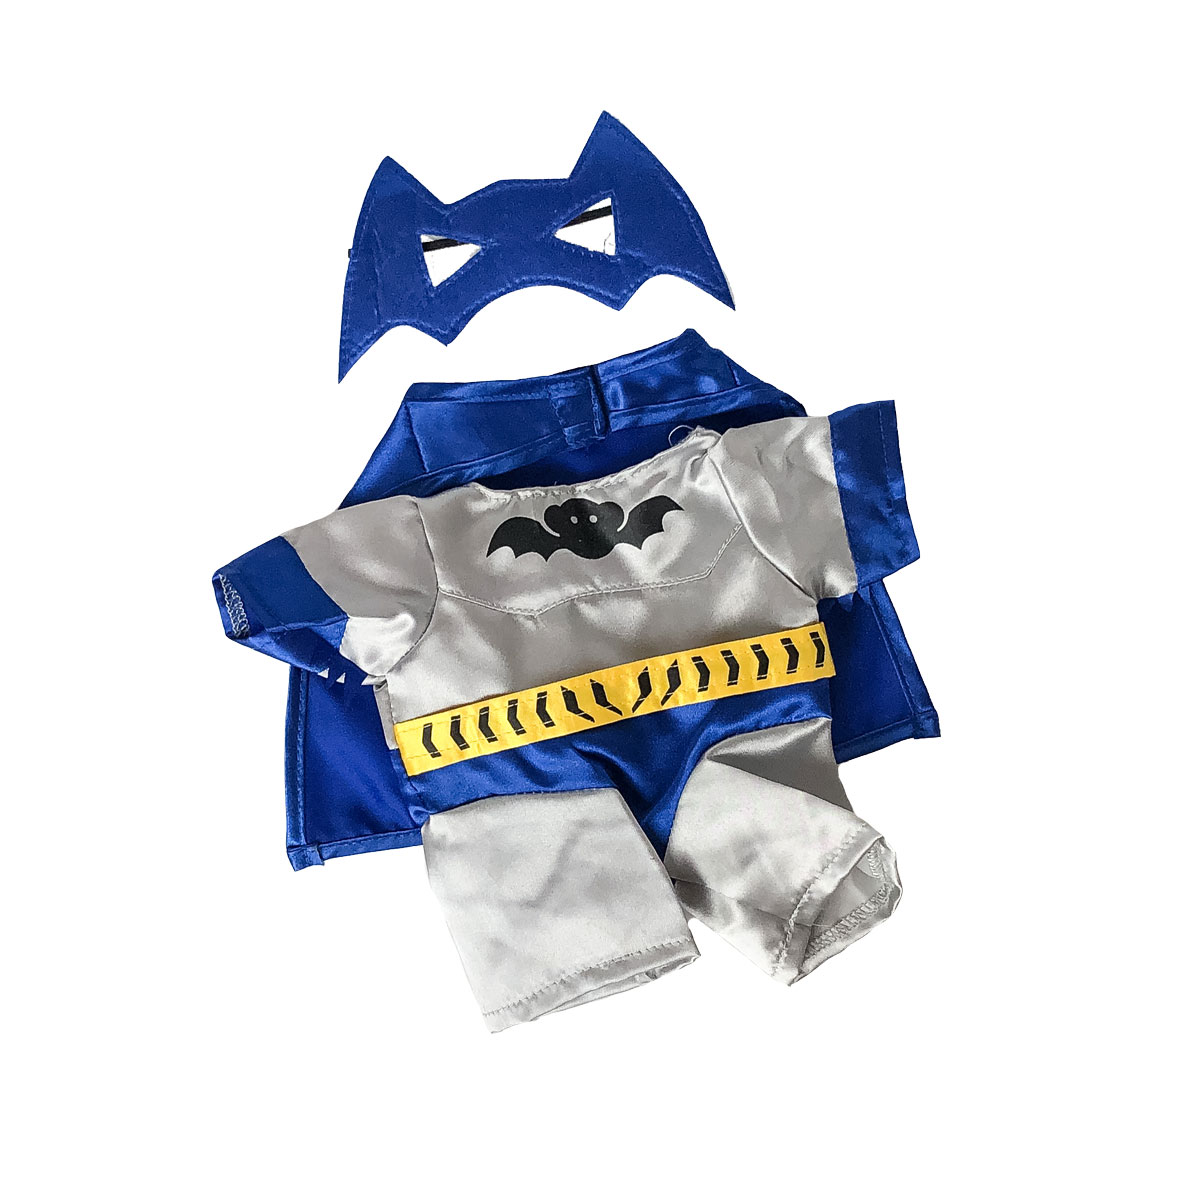 Bat Hero costume for 16" plush stuffed animals and dolls.